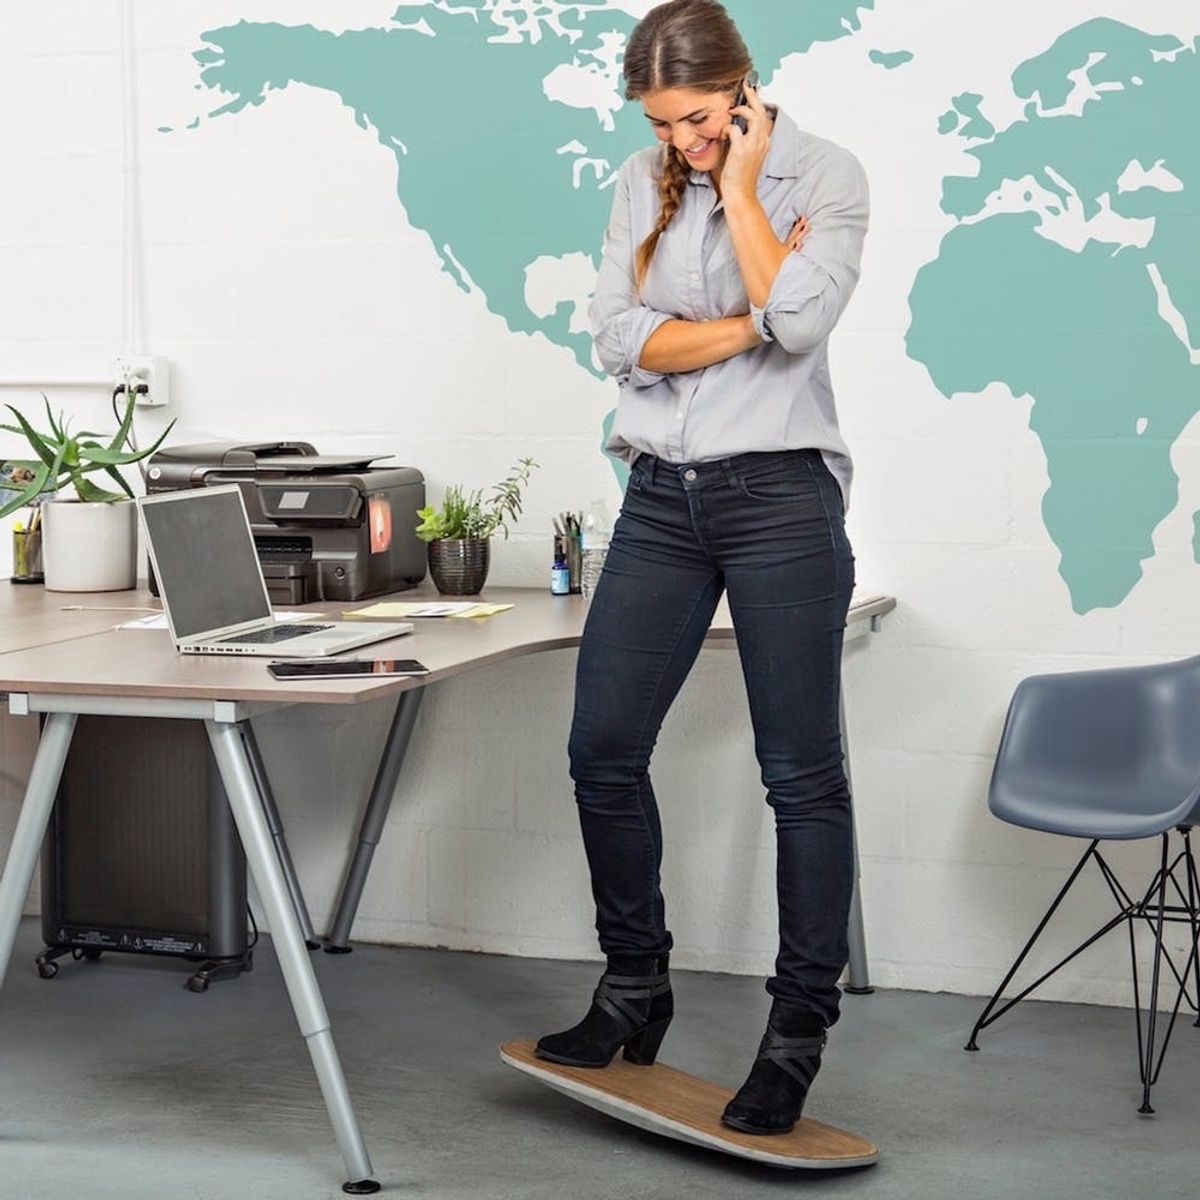 Forget Standing Desks — Surfing Desks Are the Latest Work Trend